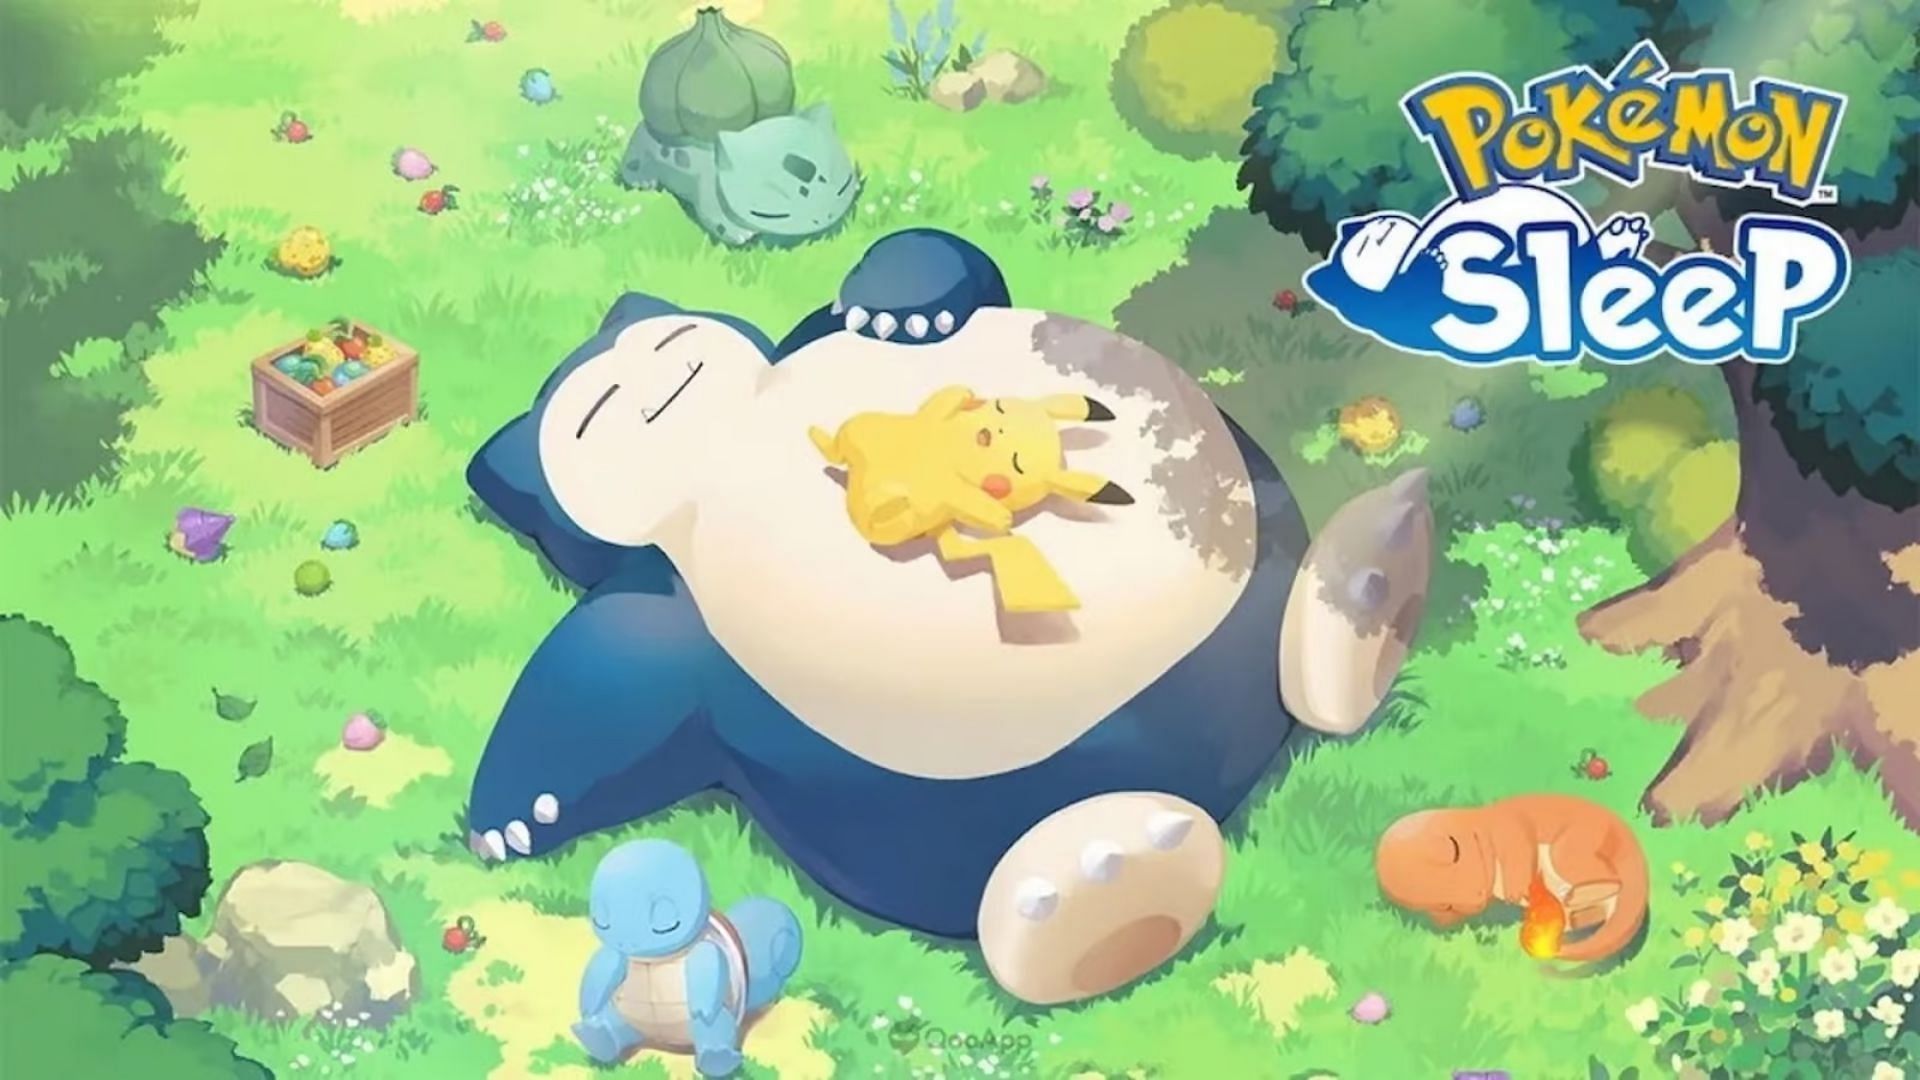 Official artwork for Pokemon GO (Image via The Pokemon Company)